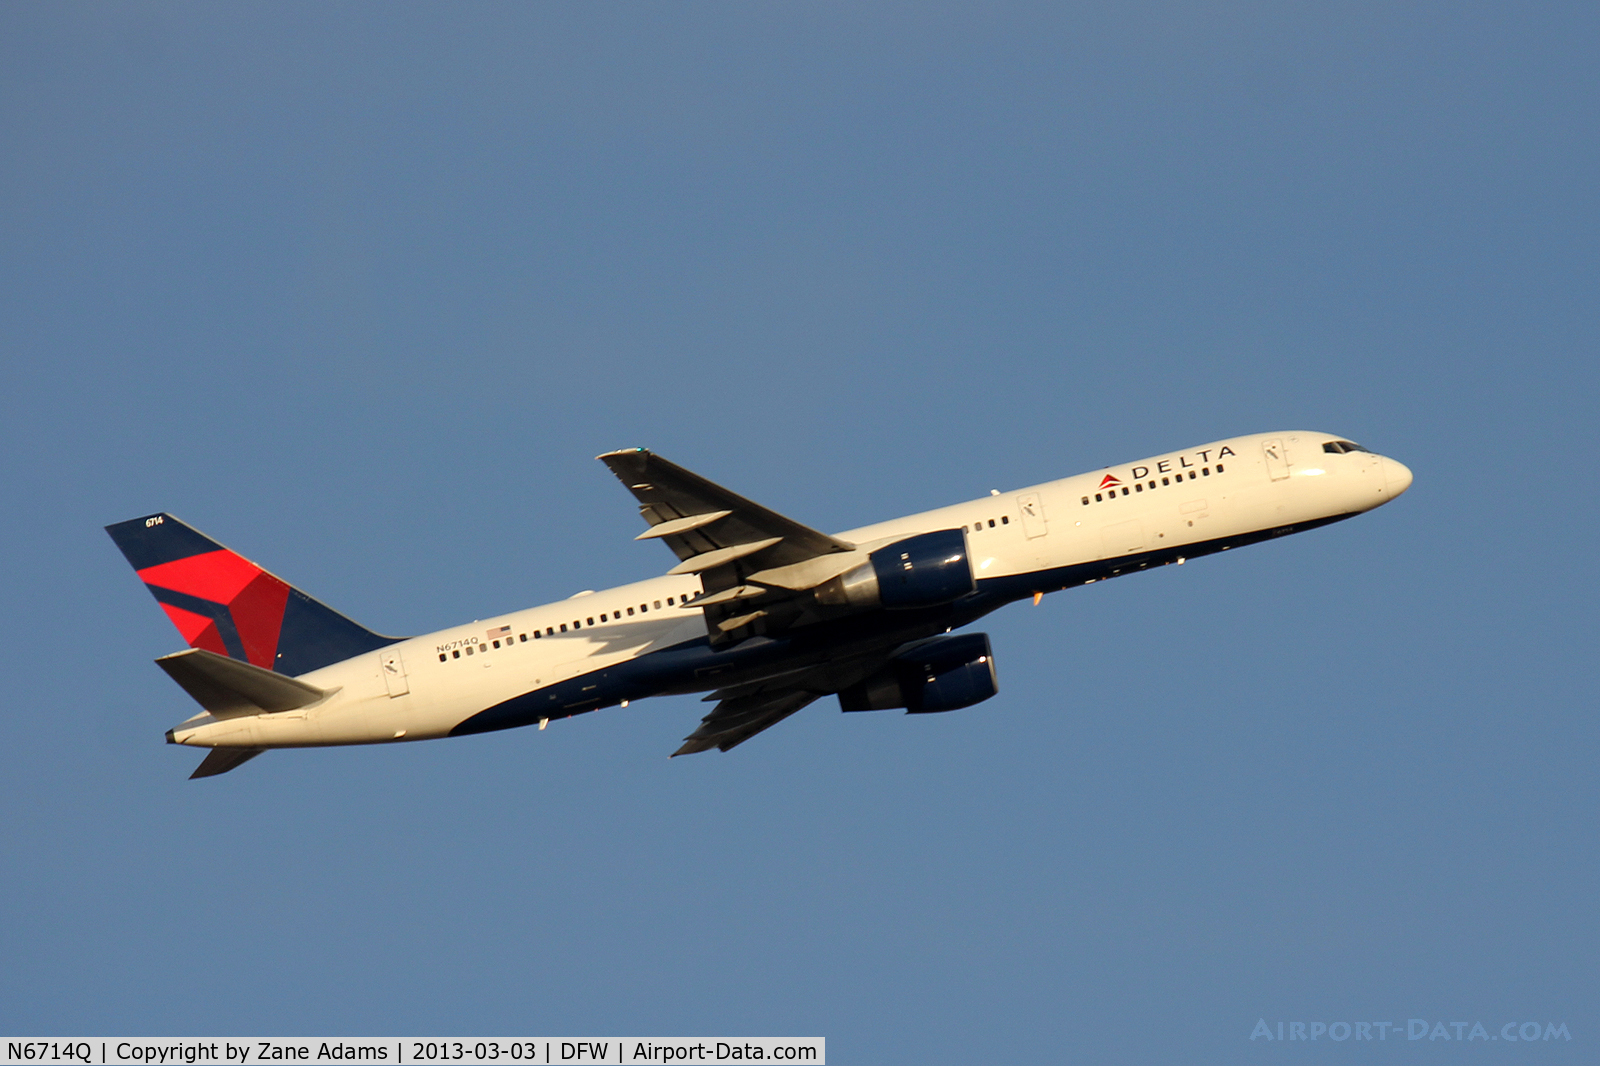 N6714Q, 2000 Boeing 757-232 C/N 30485, Delta 757 departing DFW Aiport